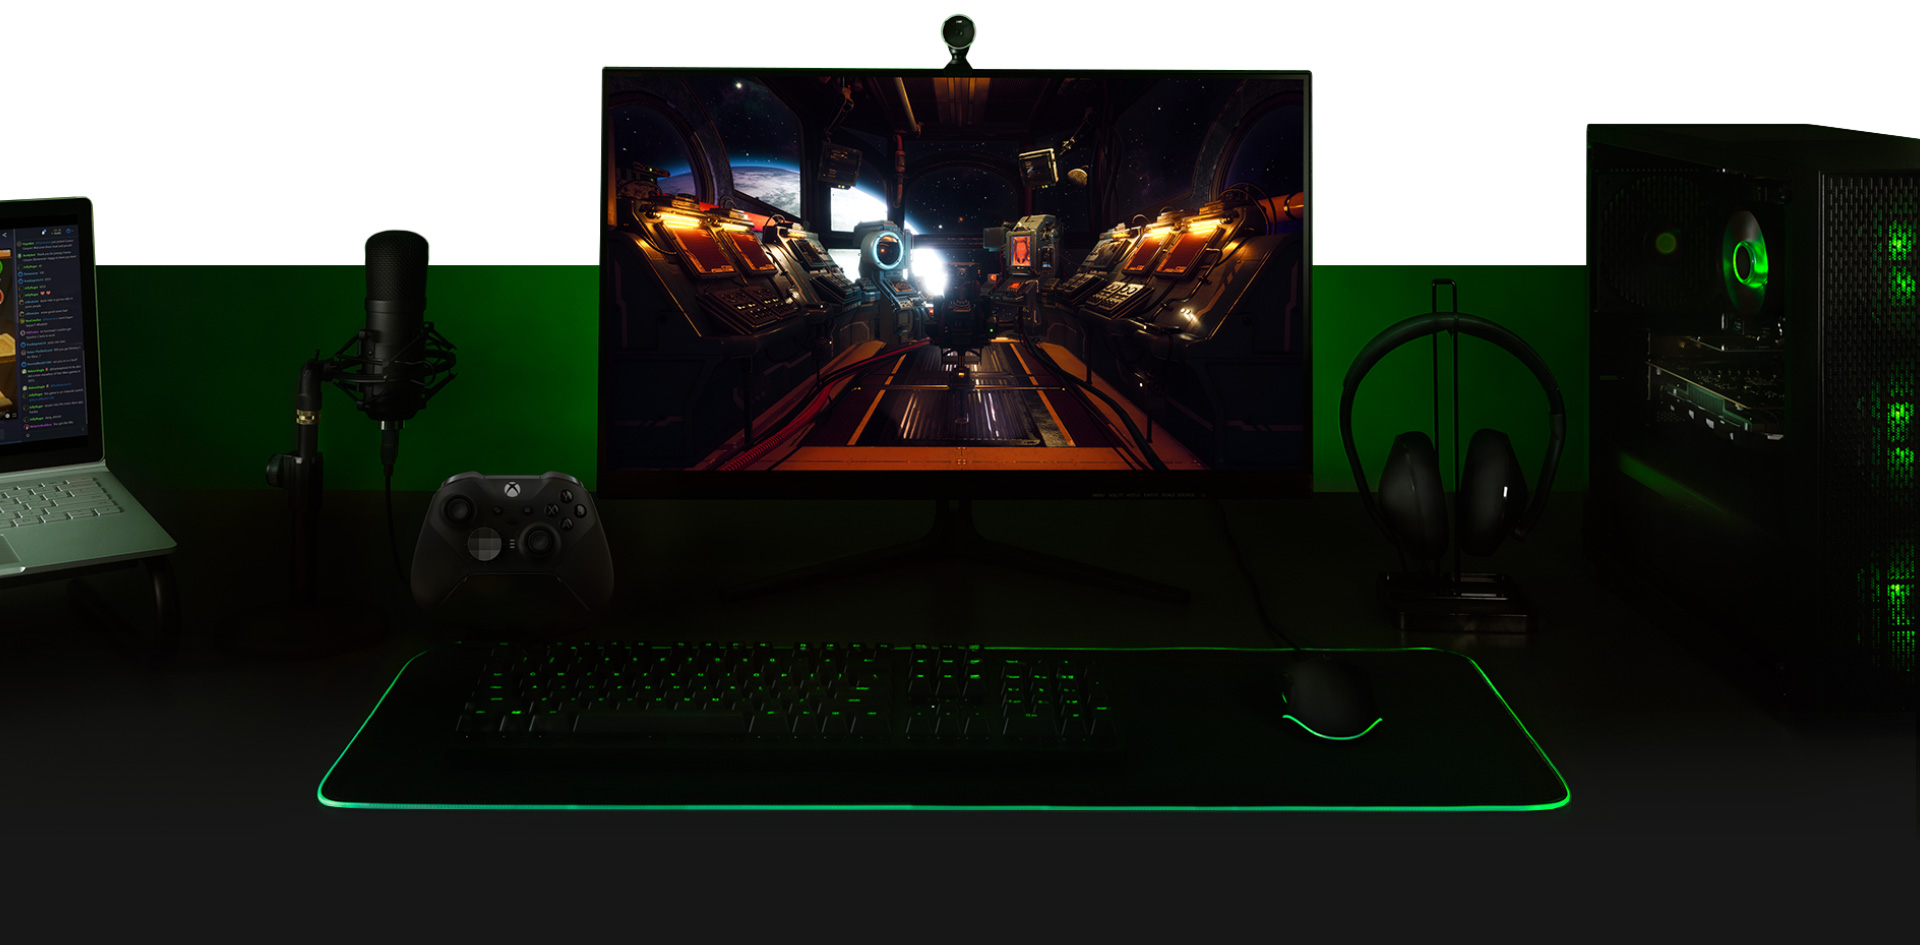 ПК, монітор з зображенням гри The Outer Worlds, клавіатура, геймпад Xbox One, мікрофон і ноутбук, налаштовані разом.